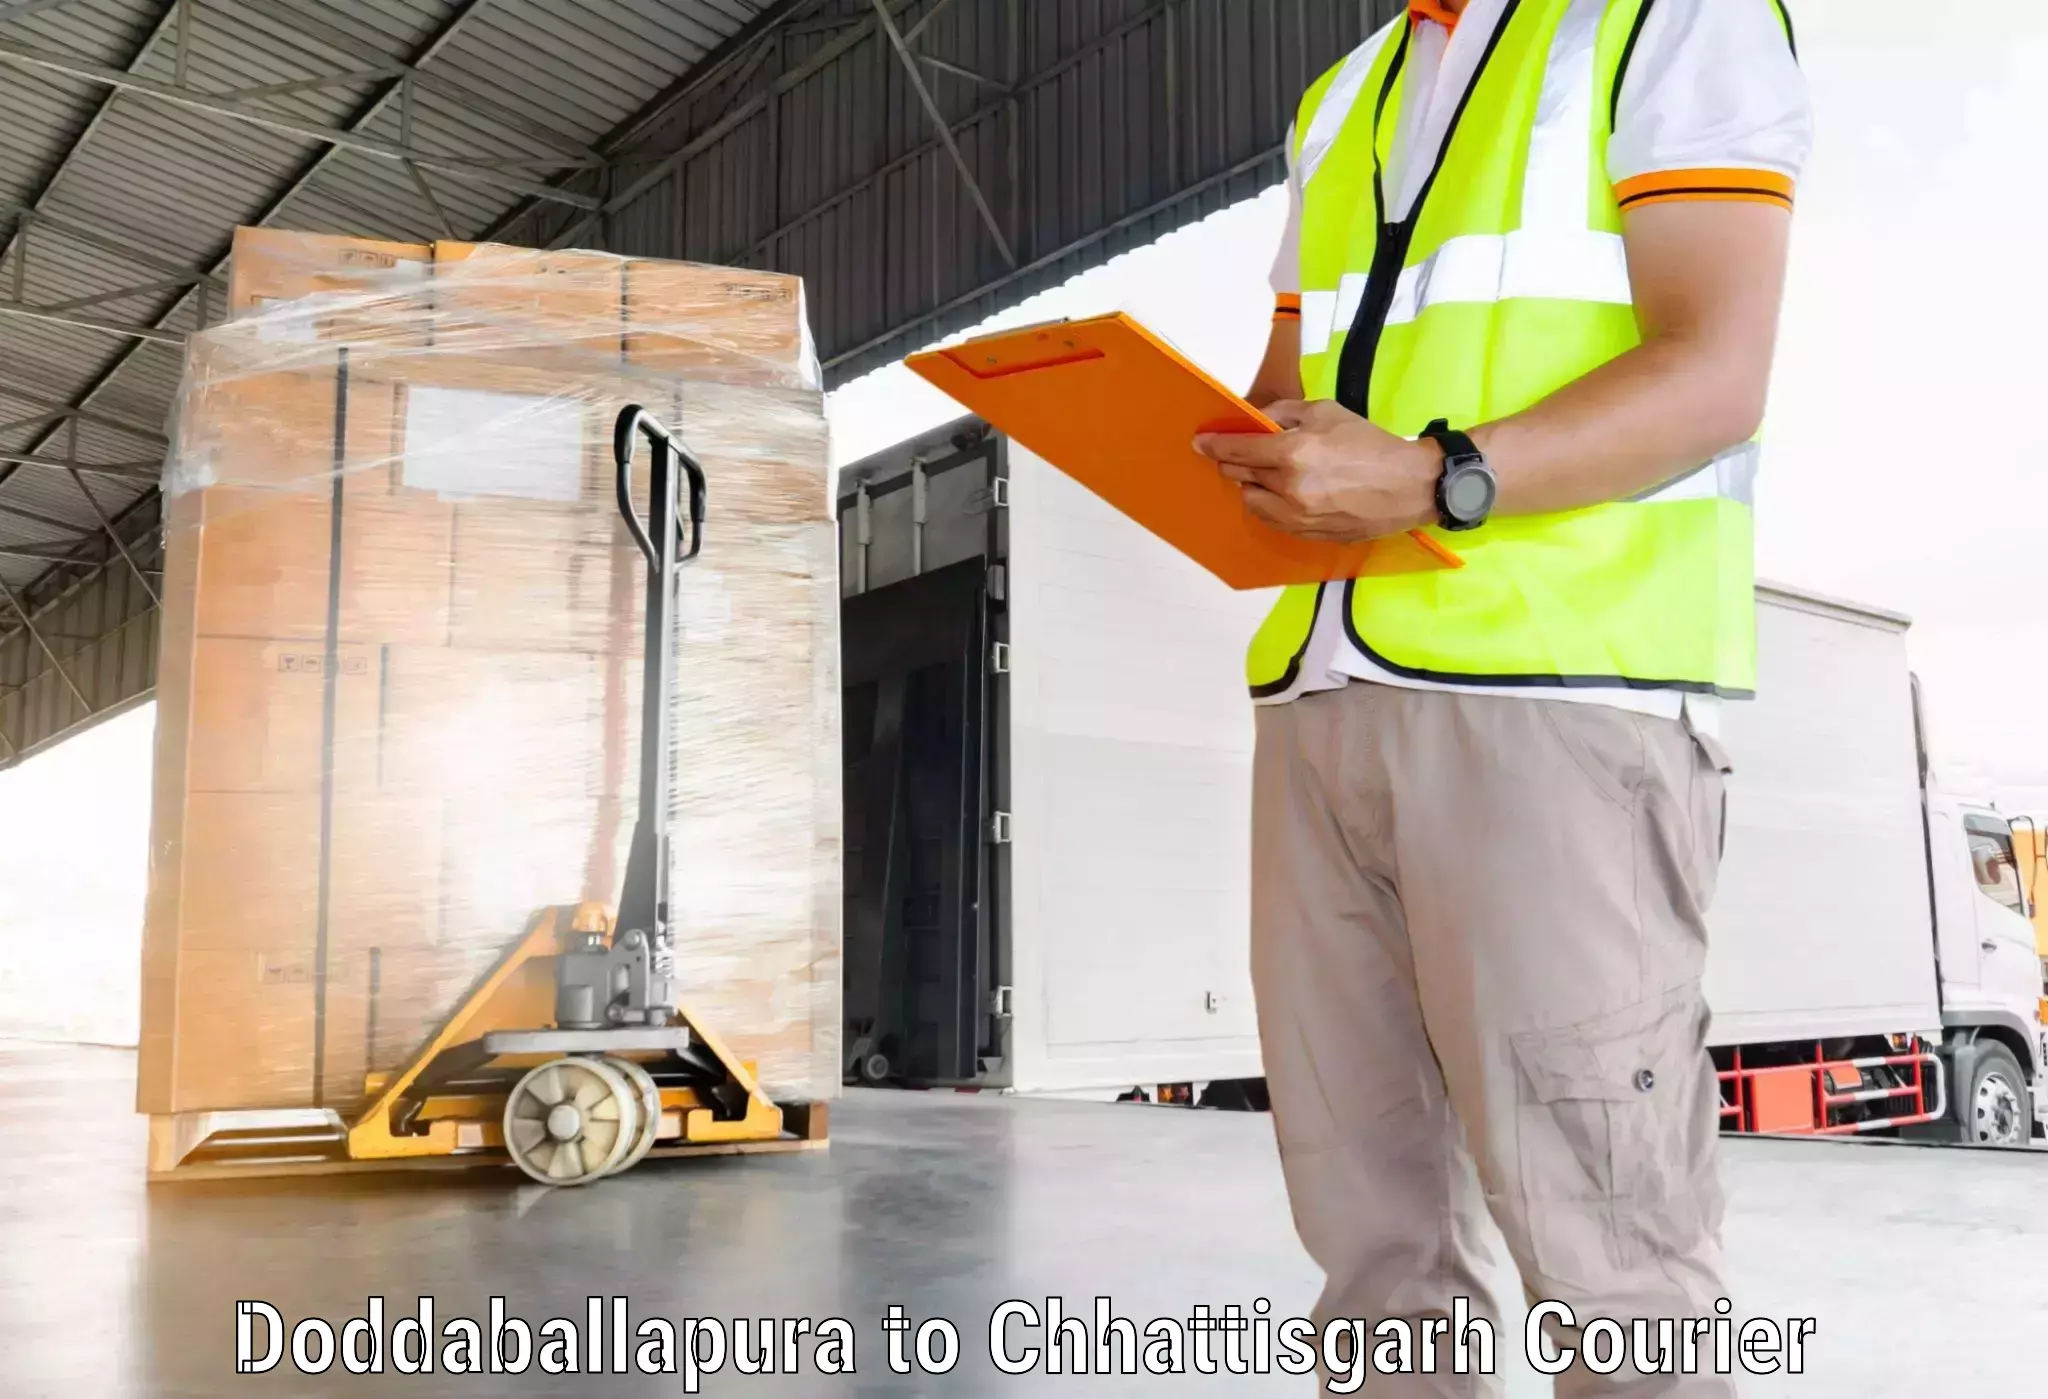 Urgent courier needs Doddaballapura to Ambikapur